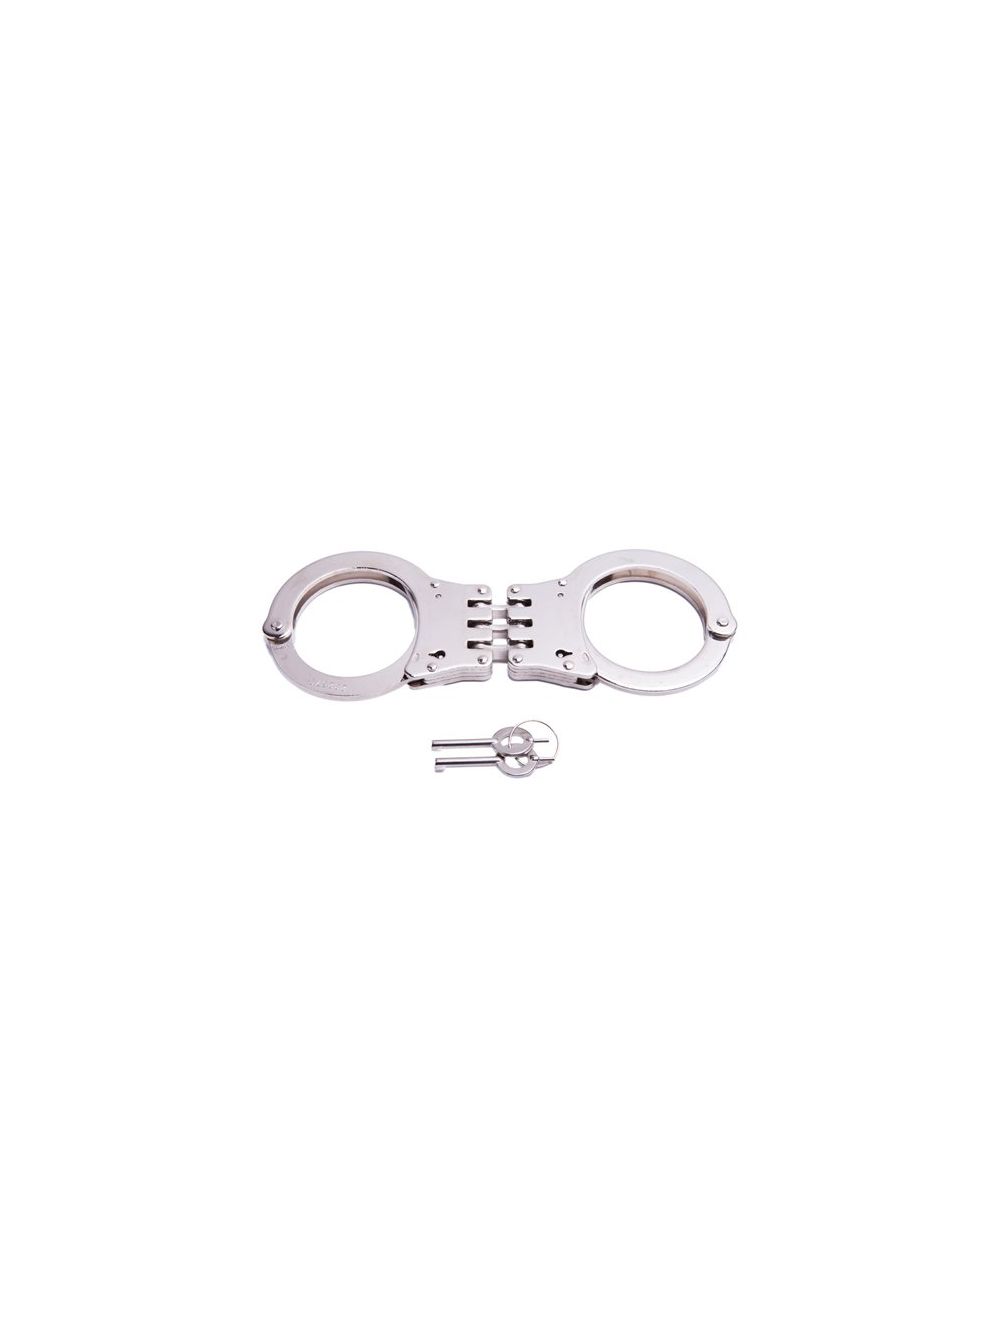 UZI Hinged Handcuff